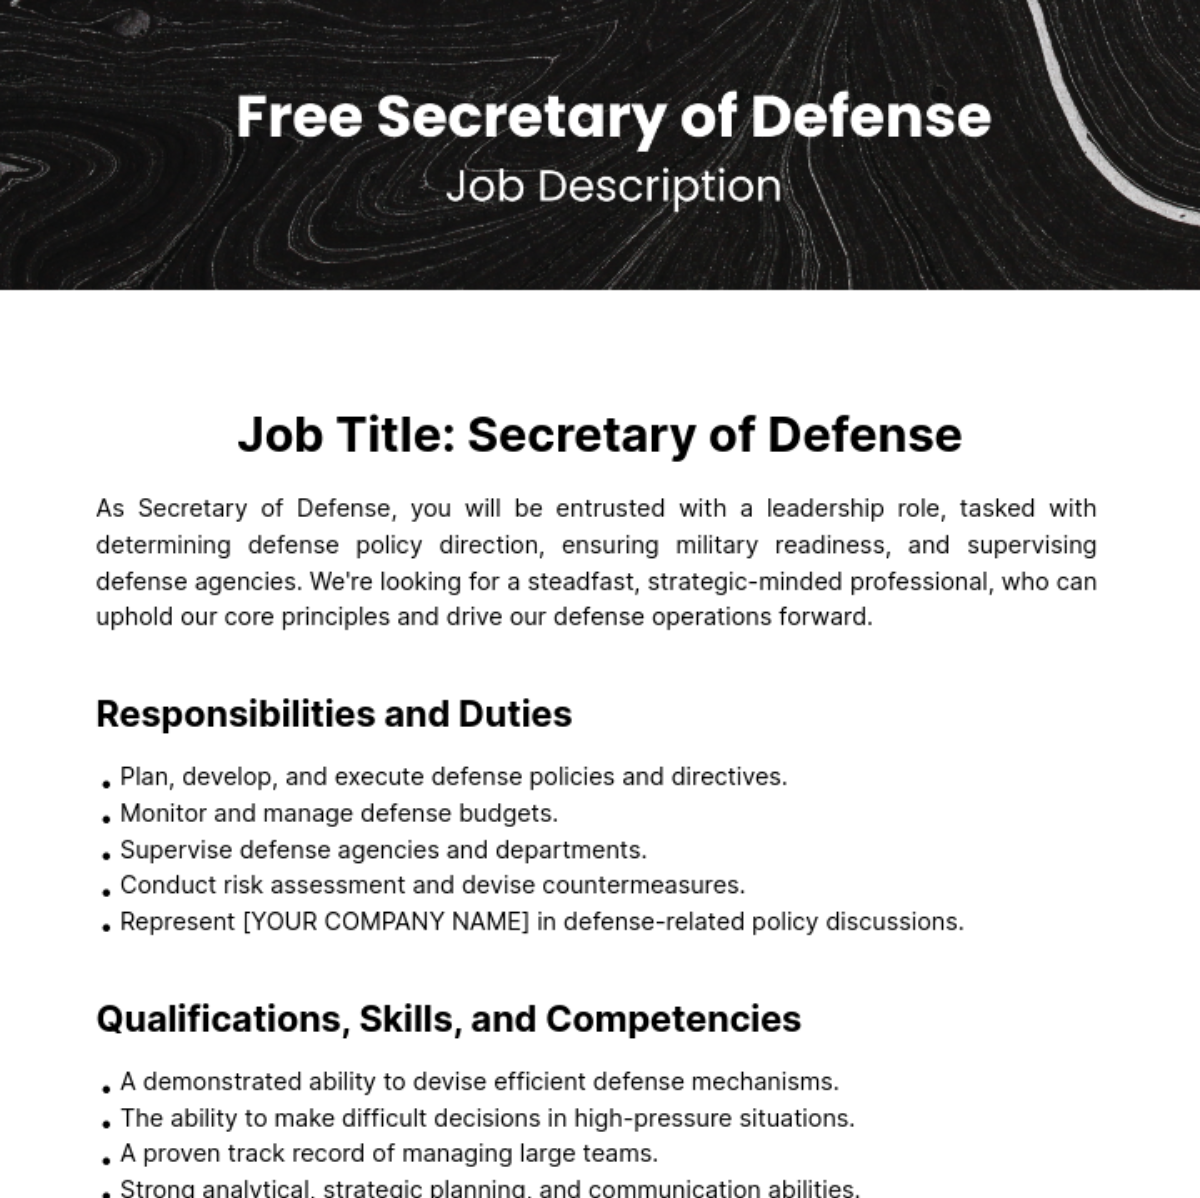 Free Secretary of Defense Job Description Template